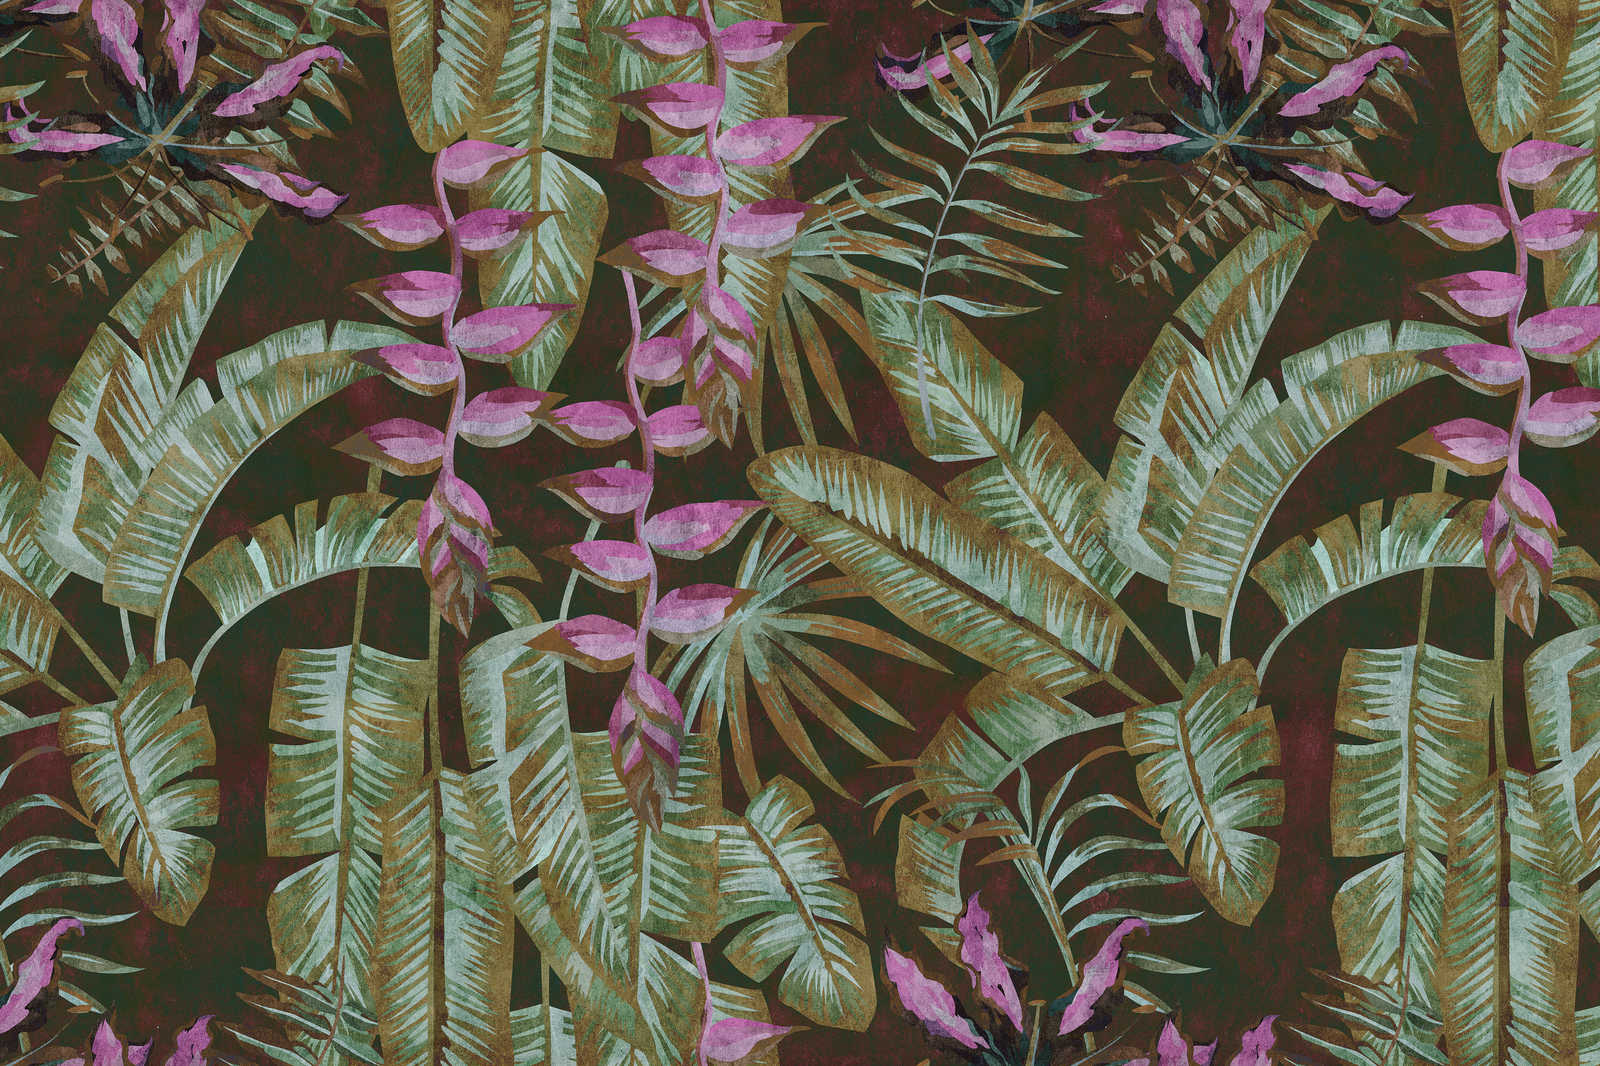             Tropicana 1 - Dschungel Leinwandbild mit Bananenblättern & Farnen – 0,90 m x 0,60 m
        